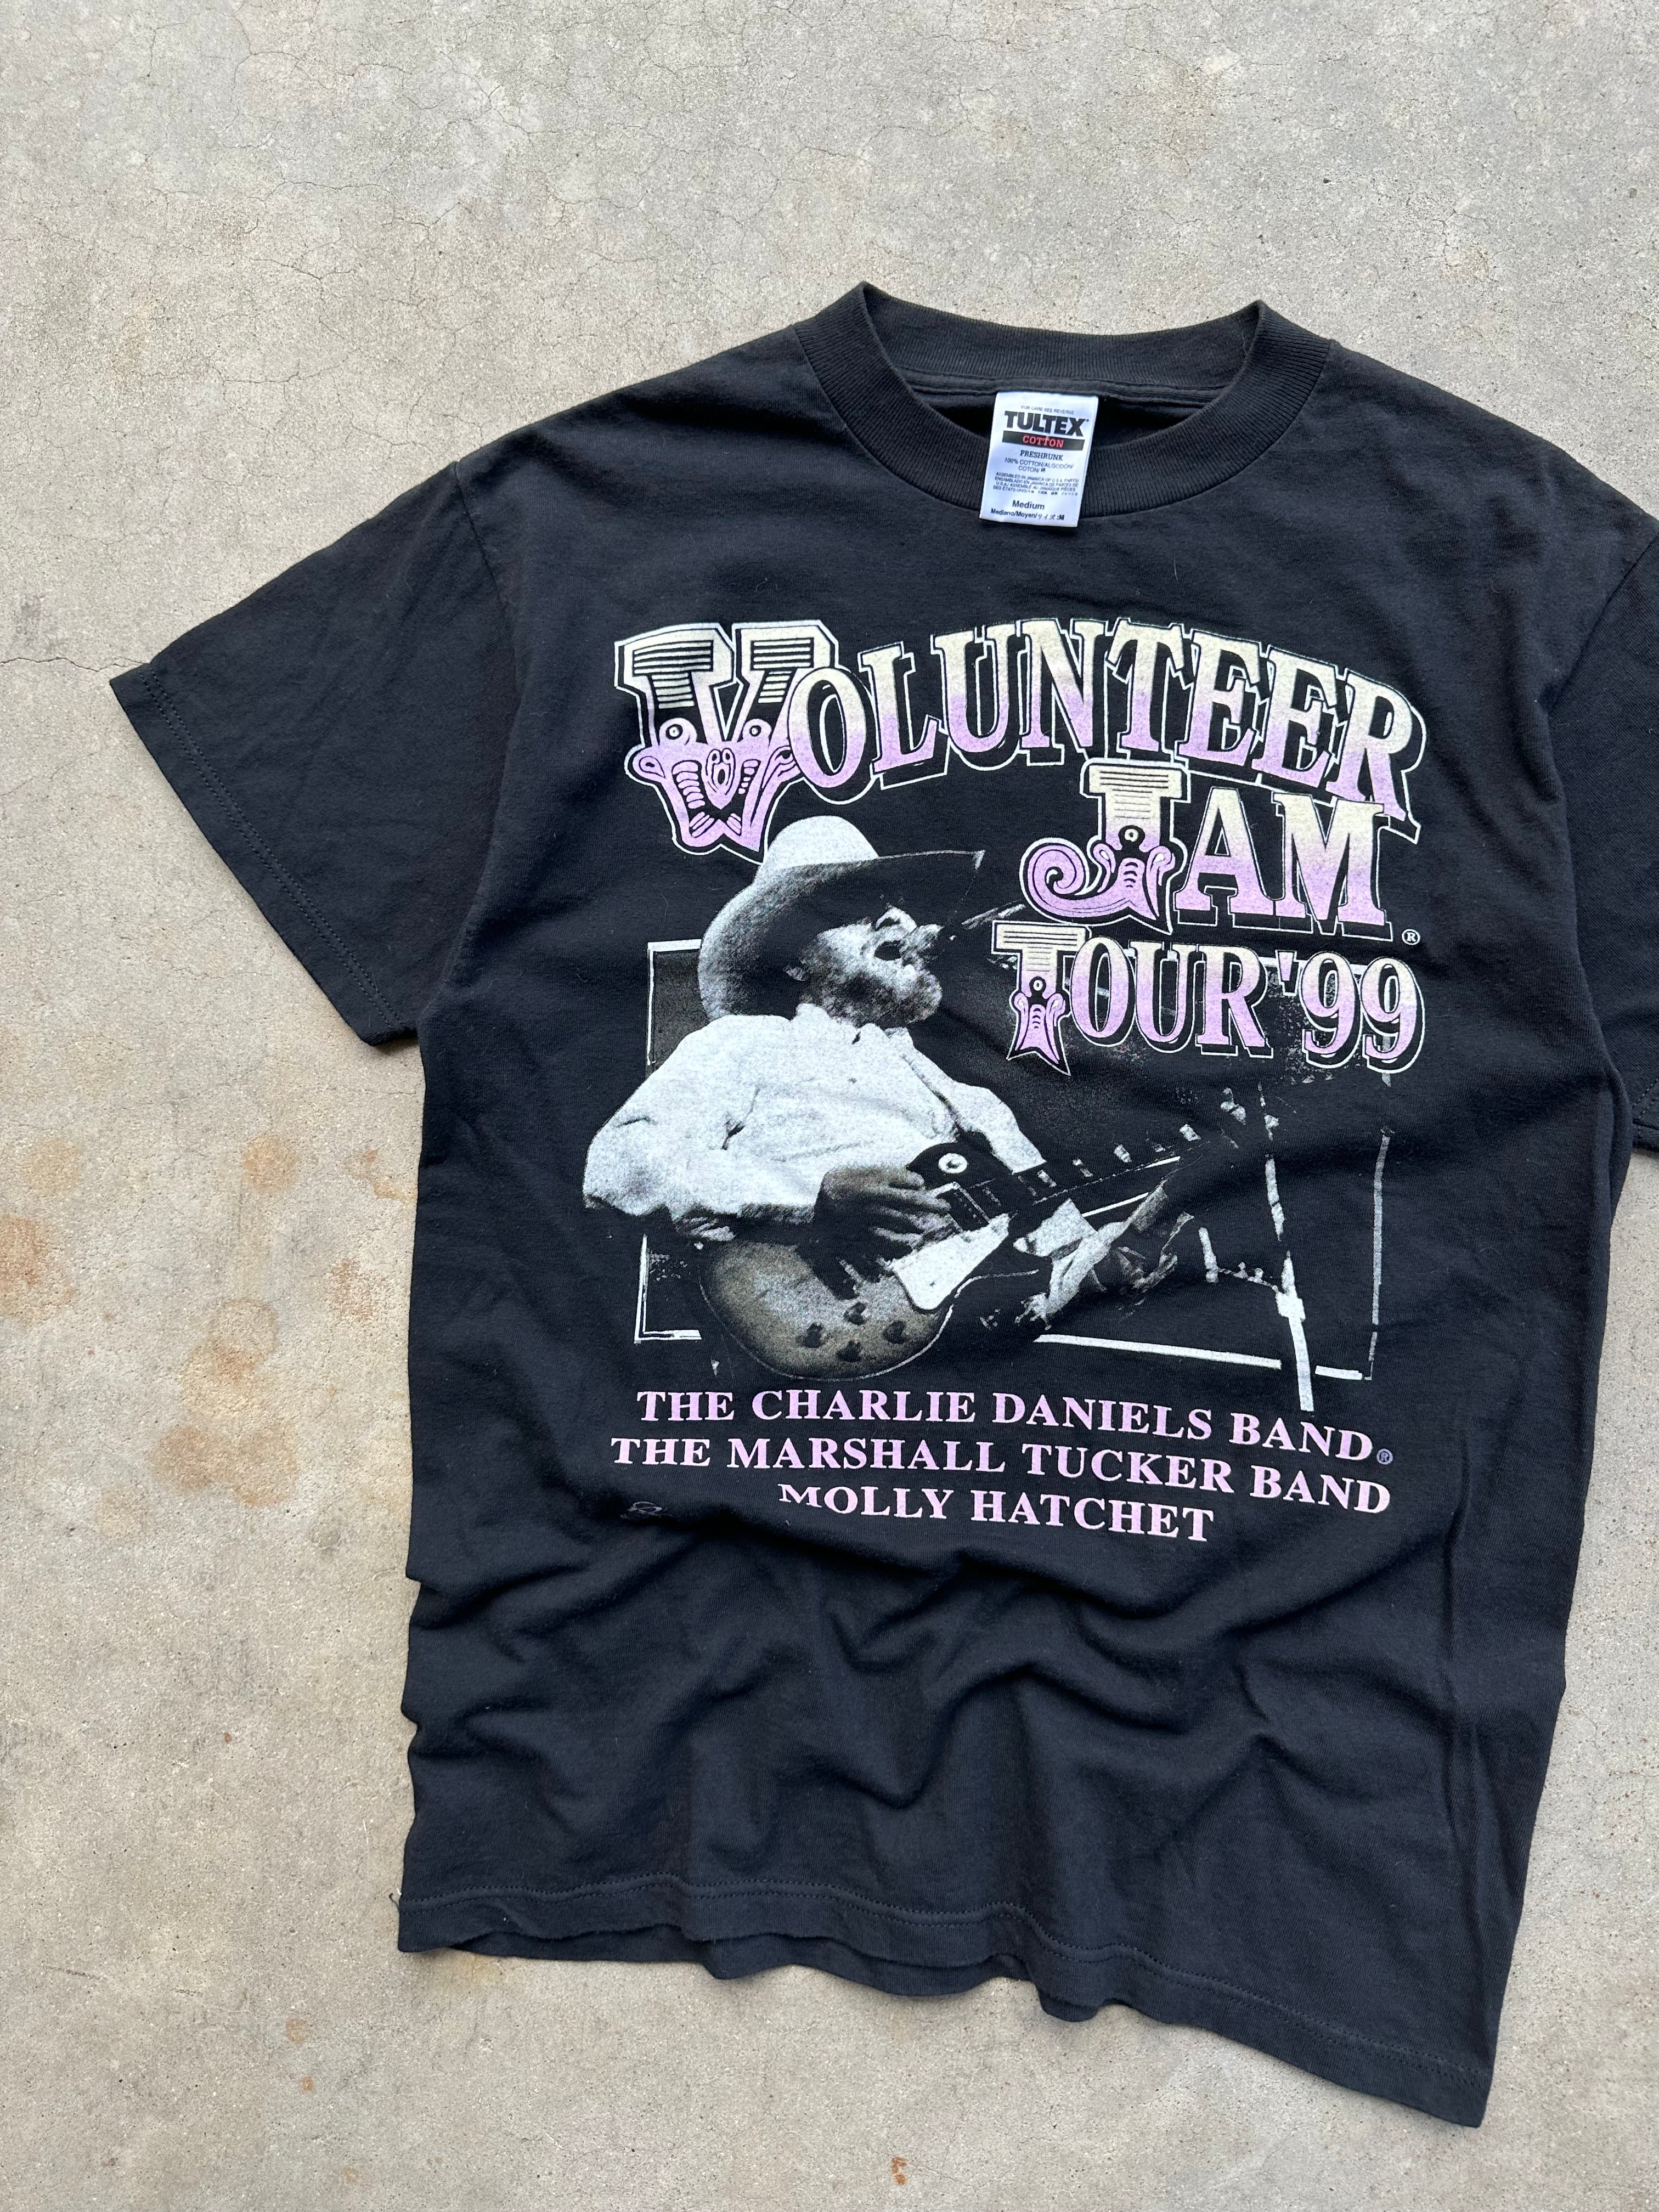 1999 Volunteer Jam Tour Charlie Daniel’s T-Shirt (M)